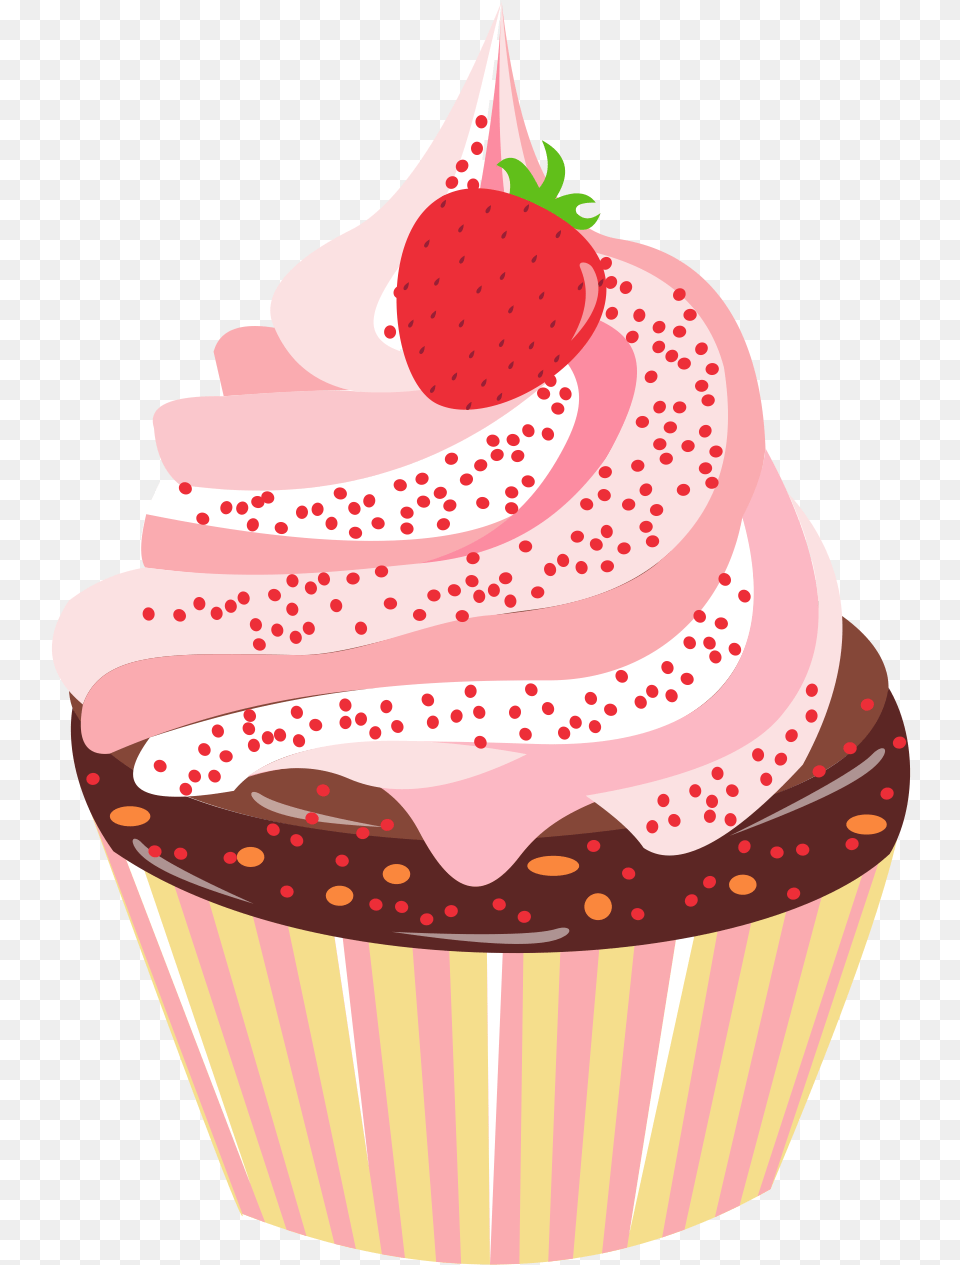 Dessert Cake Element Design Cartoon And Vector, Cream, Cupcake, Food, Birthday Cake Free Png Download